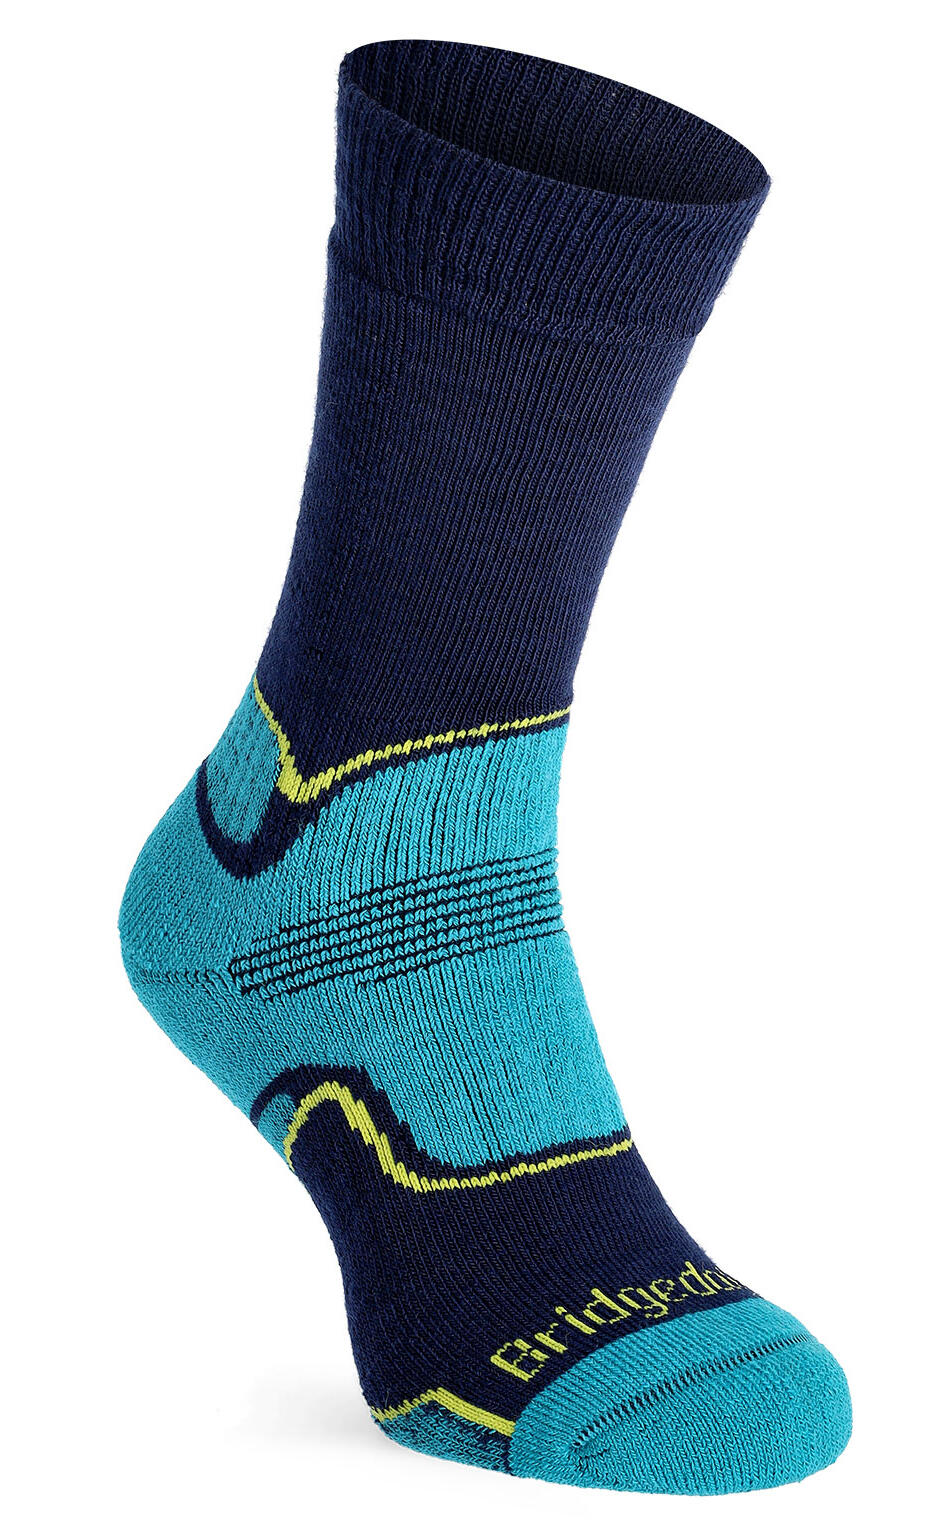 Mens Hiking Midweight Merino Wool Performance Boot Socks 2/5